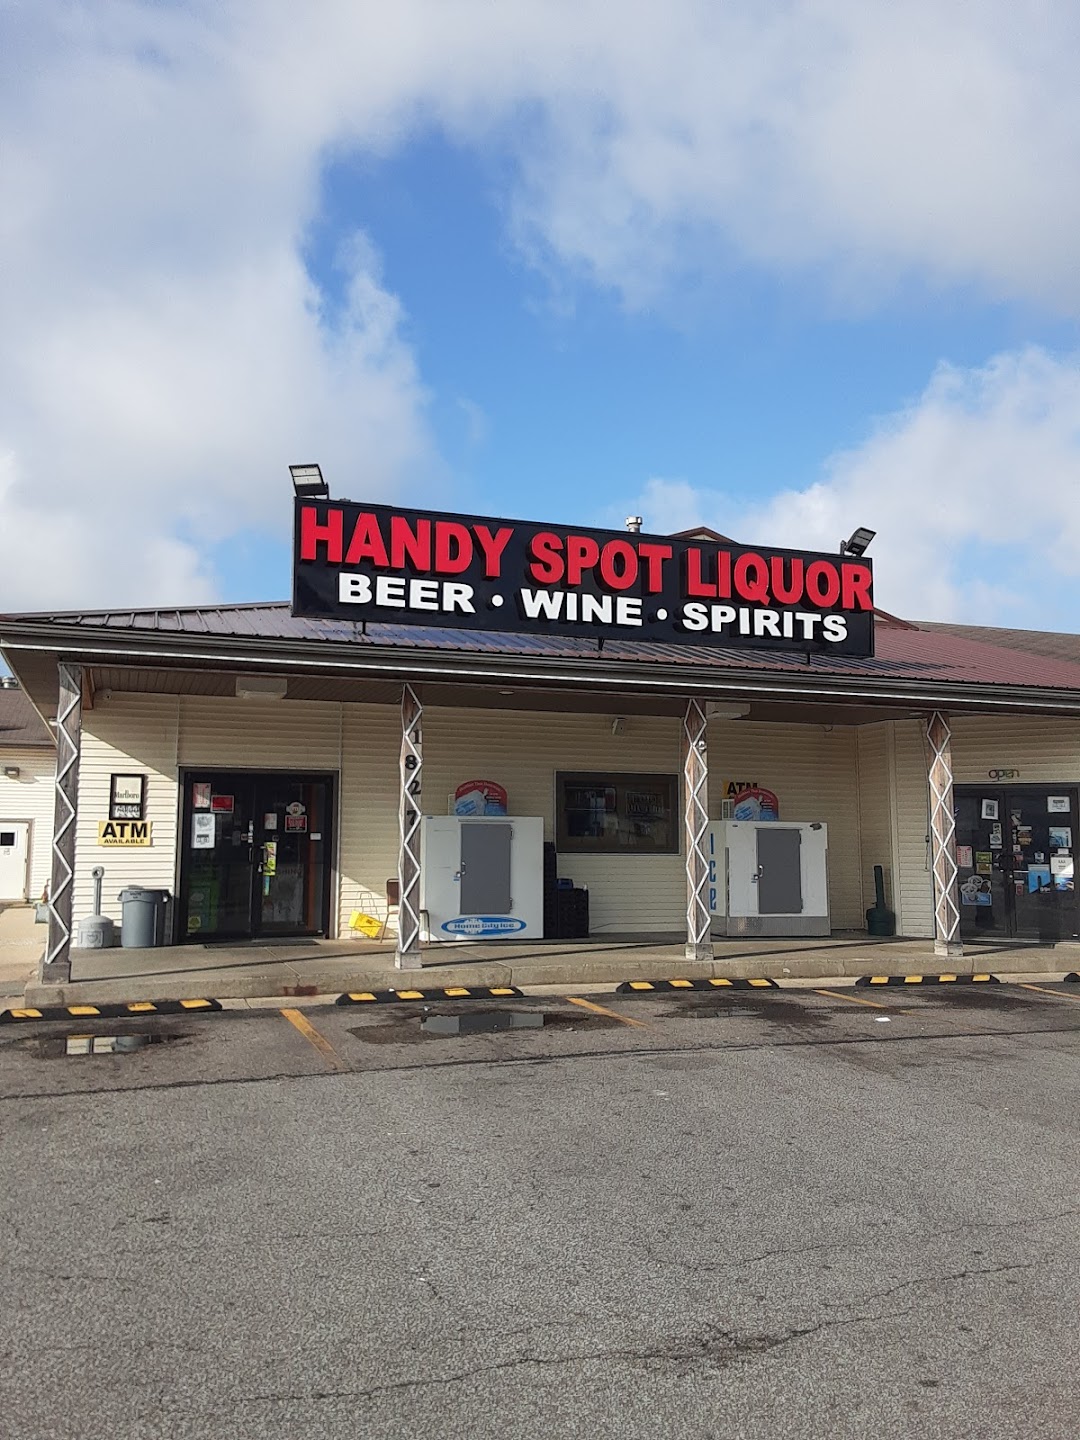 Handy spot liquor